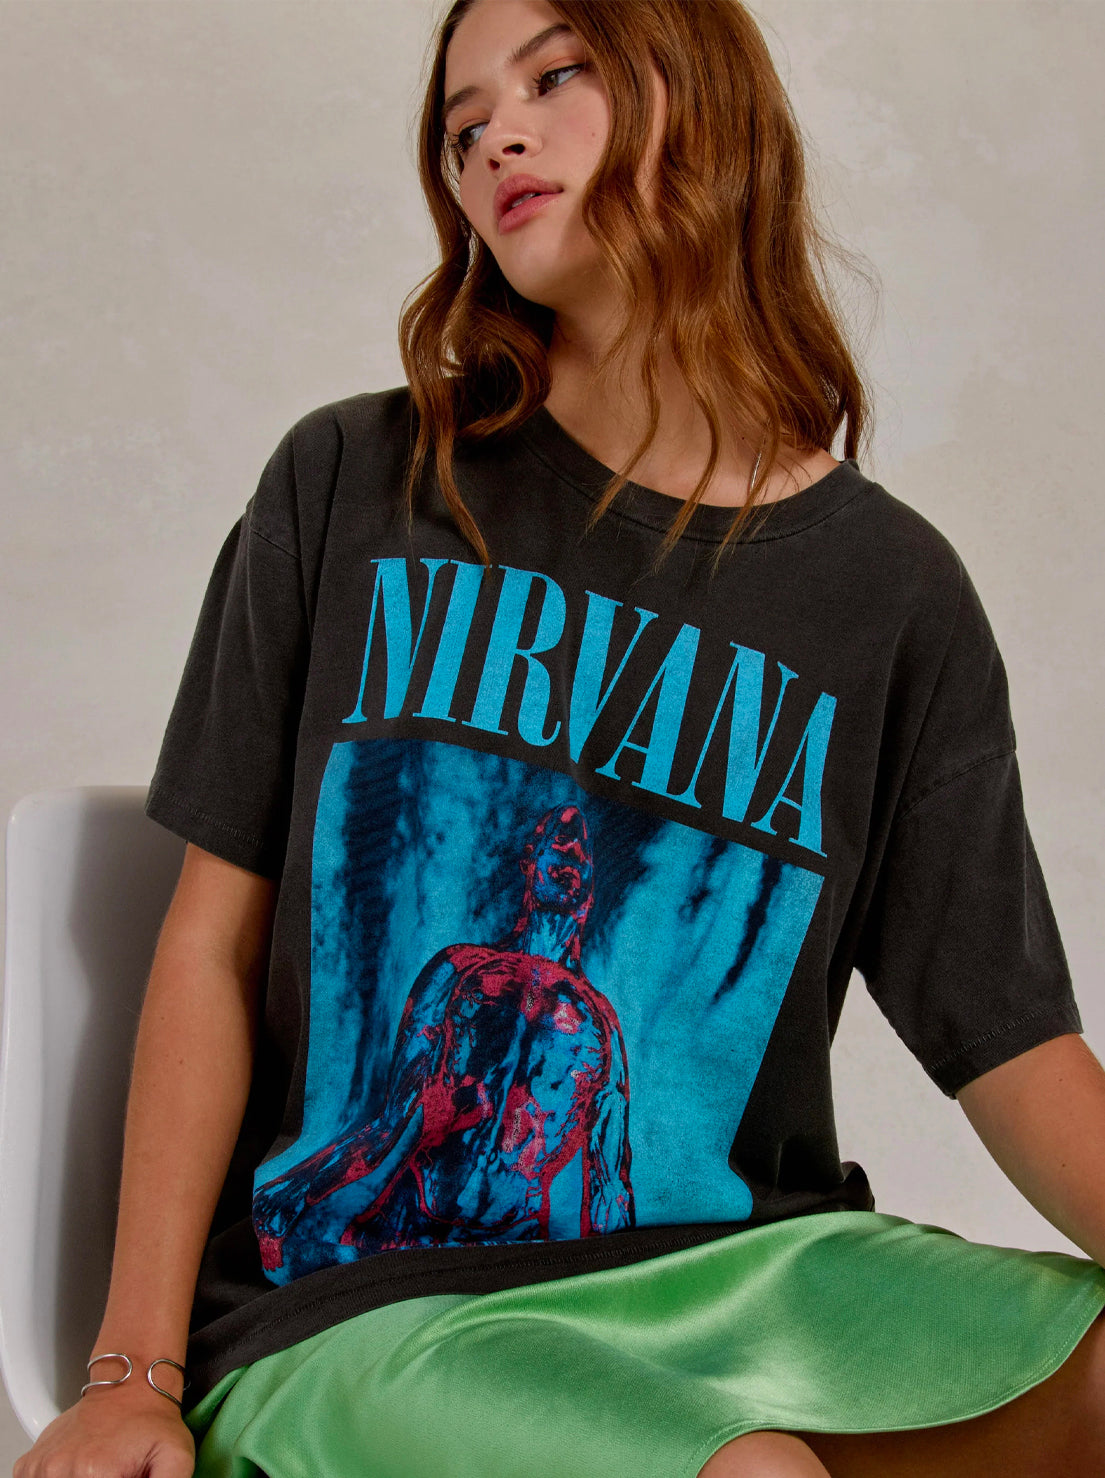 Daydreamer - Nirvana Sliver Cover Merch Tee - Pigment Black